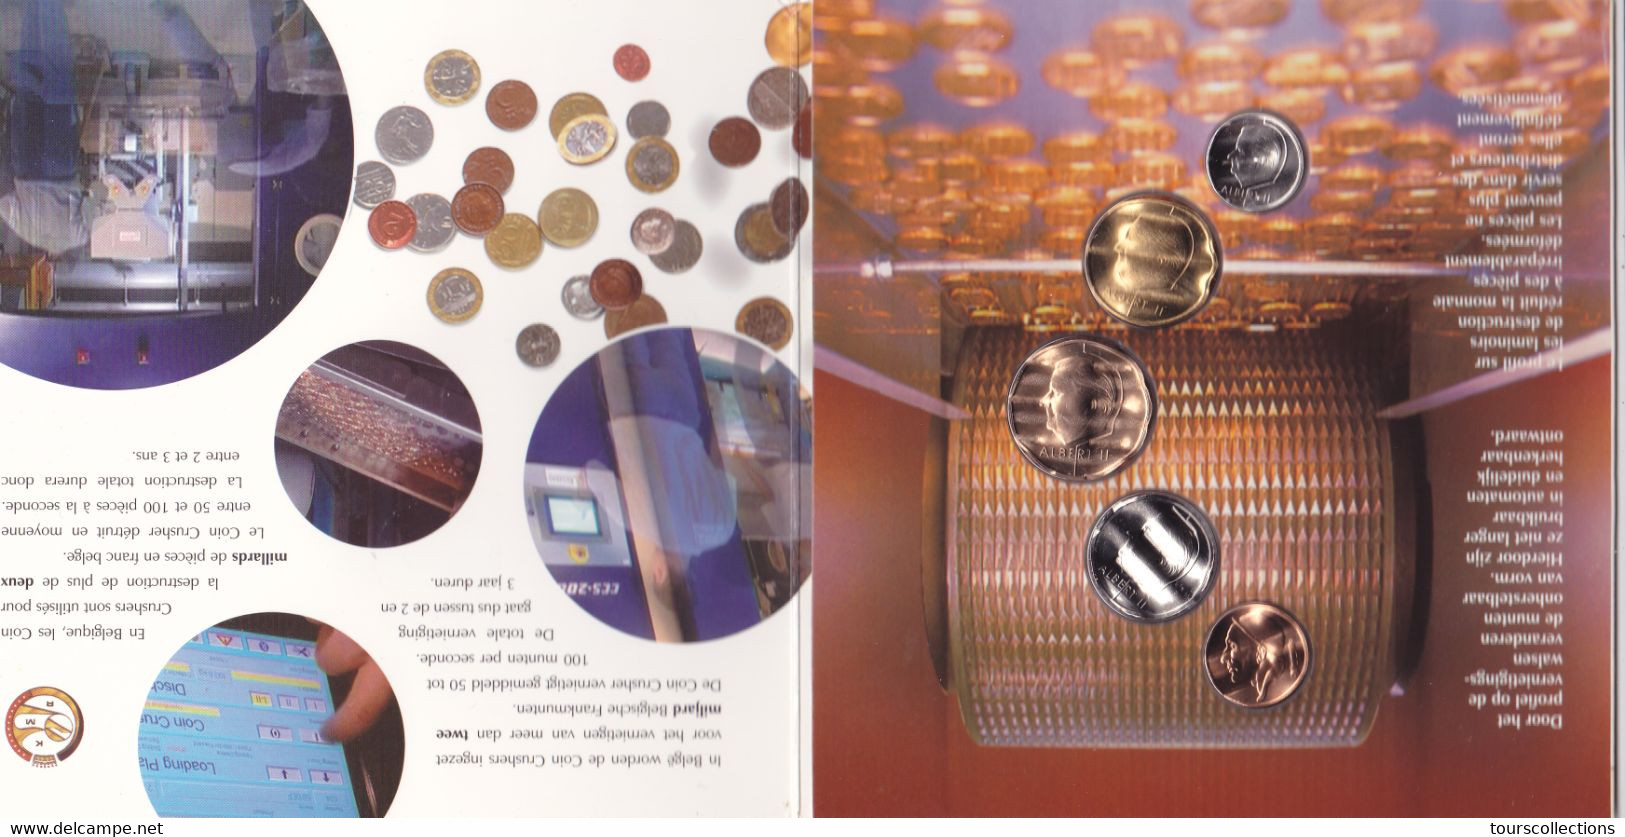 BU FDC BELGIQUE 2002 COIN CRUSHER Monnaies Albert II De 1998 Et 1999 Adieu Le Franc Bonjour L'Euro - FDEC, BU, BE & Münzkassetten